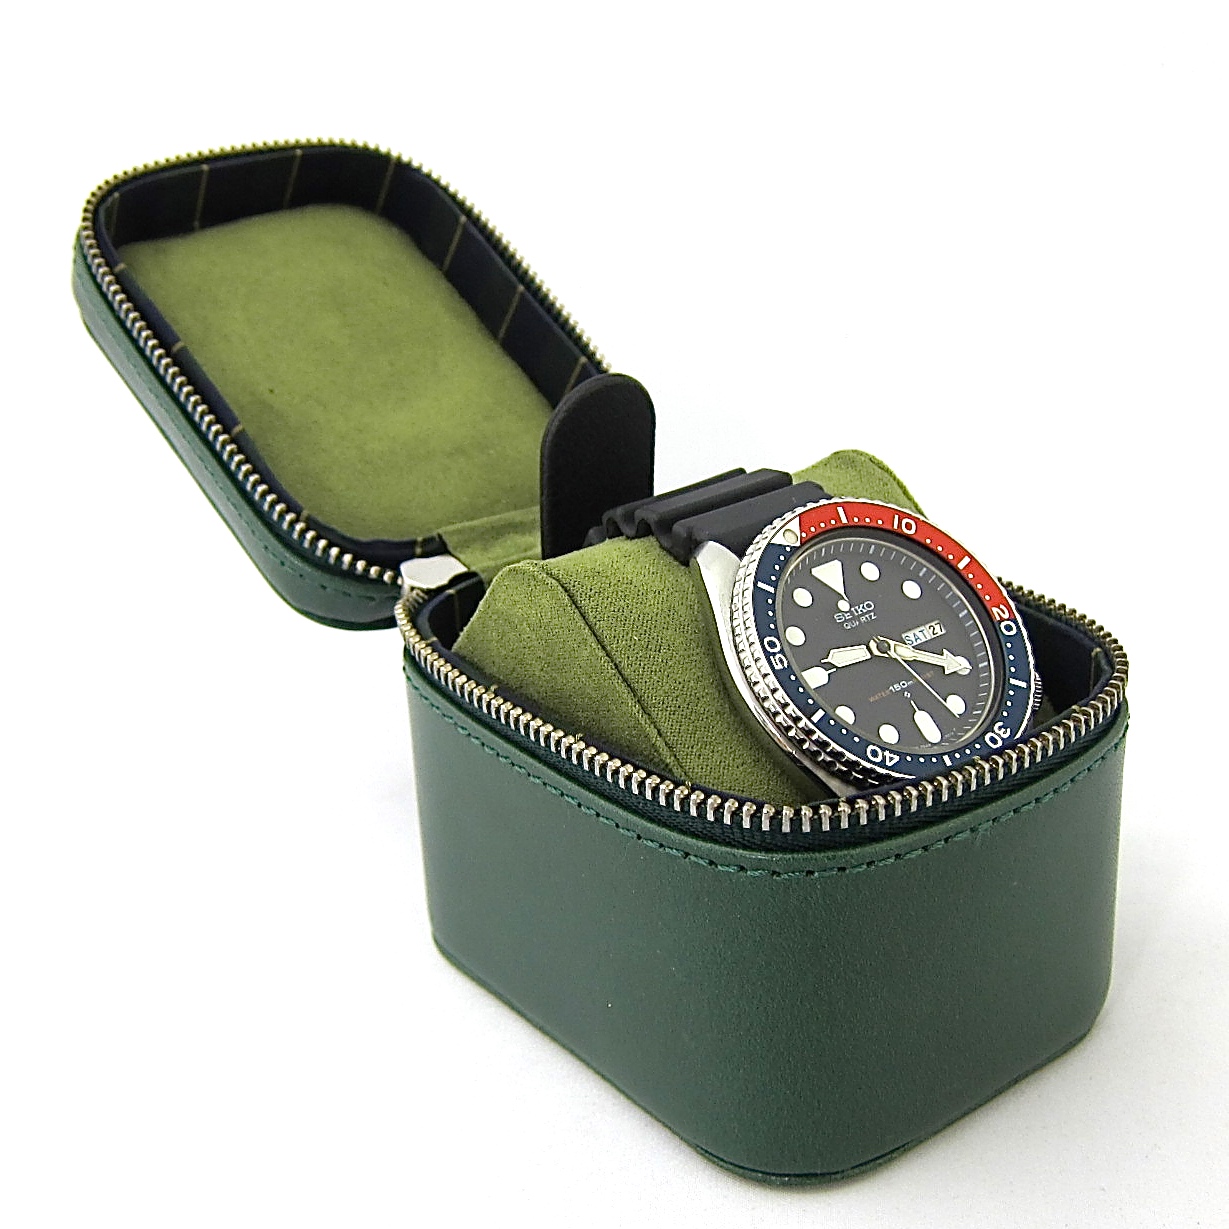 DiLoro レザージッパー腕時計ケース 旅行や保管用 ファスナー付きケースで4つの時計を安全に保管 ブラック